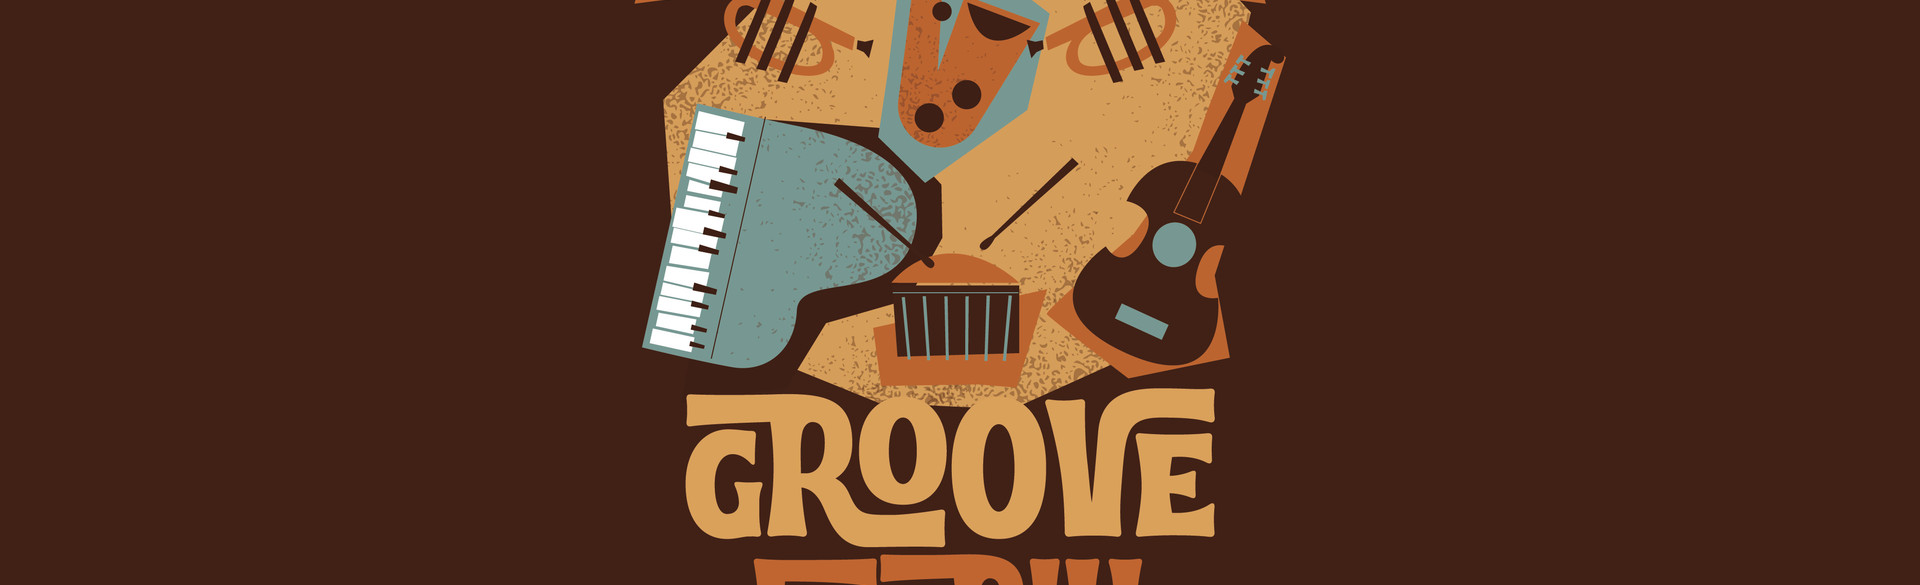 Groovefabrik Banner (1)